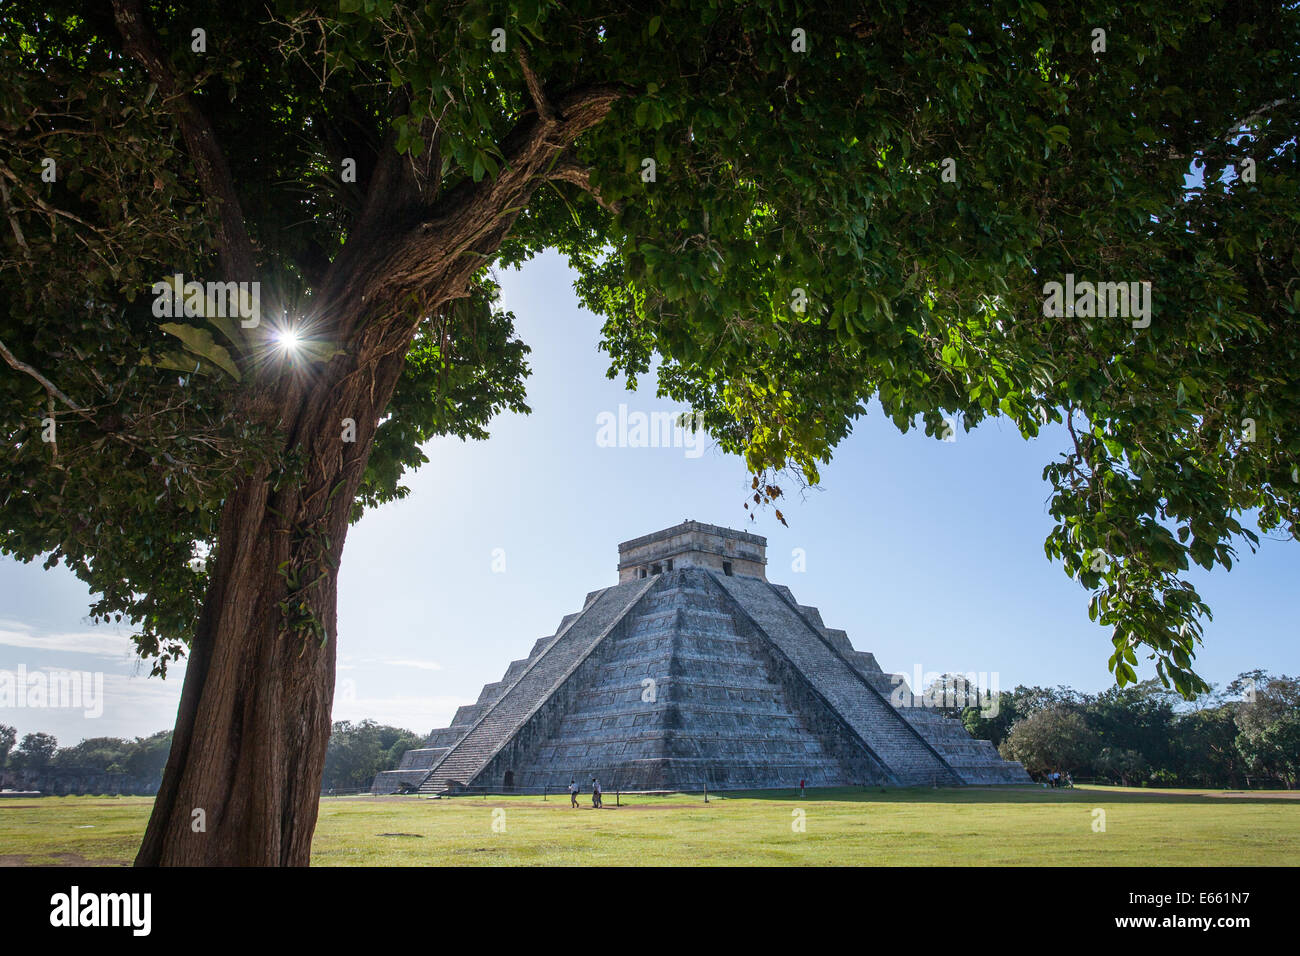 El Castillo pyramid at Chichen Itza, Yucatan, Mexico. Stock Photo